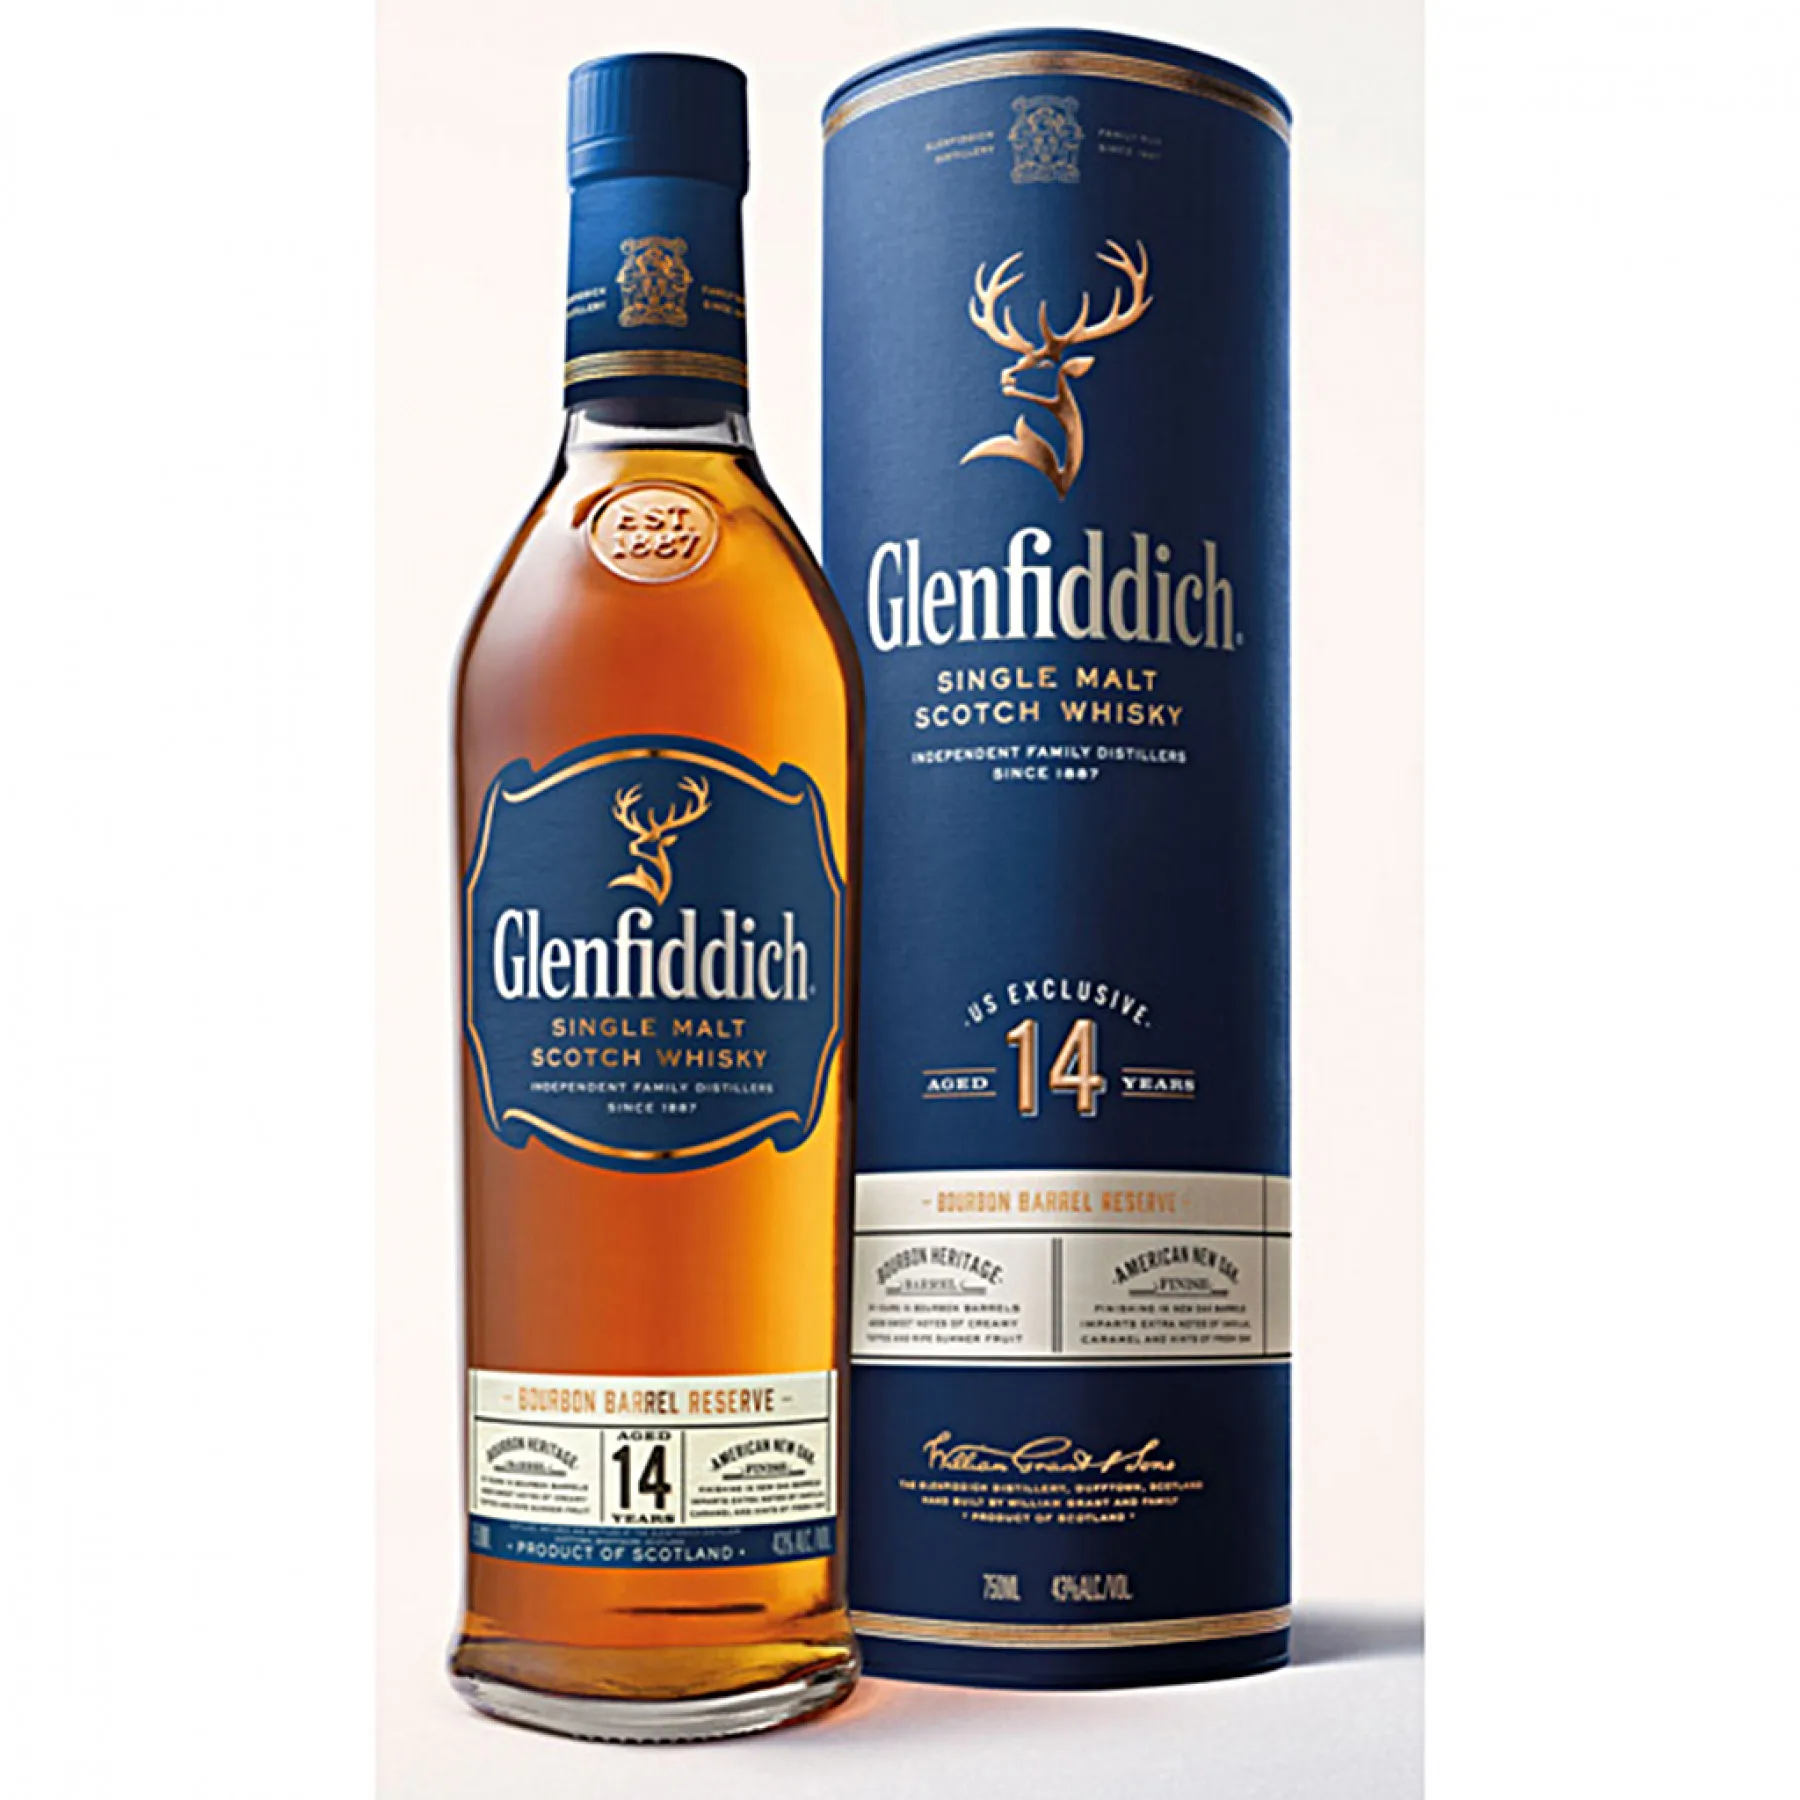 Glenfiddich Single Malt Scotch Whisky 15 Year